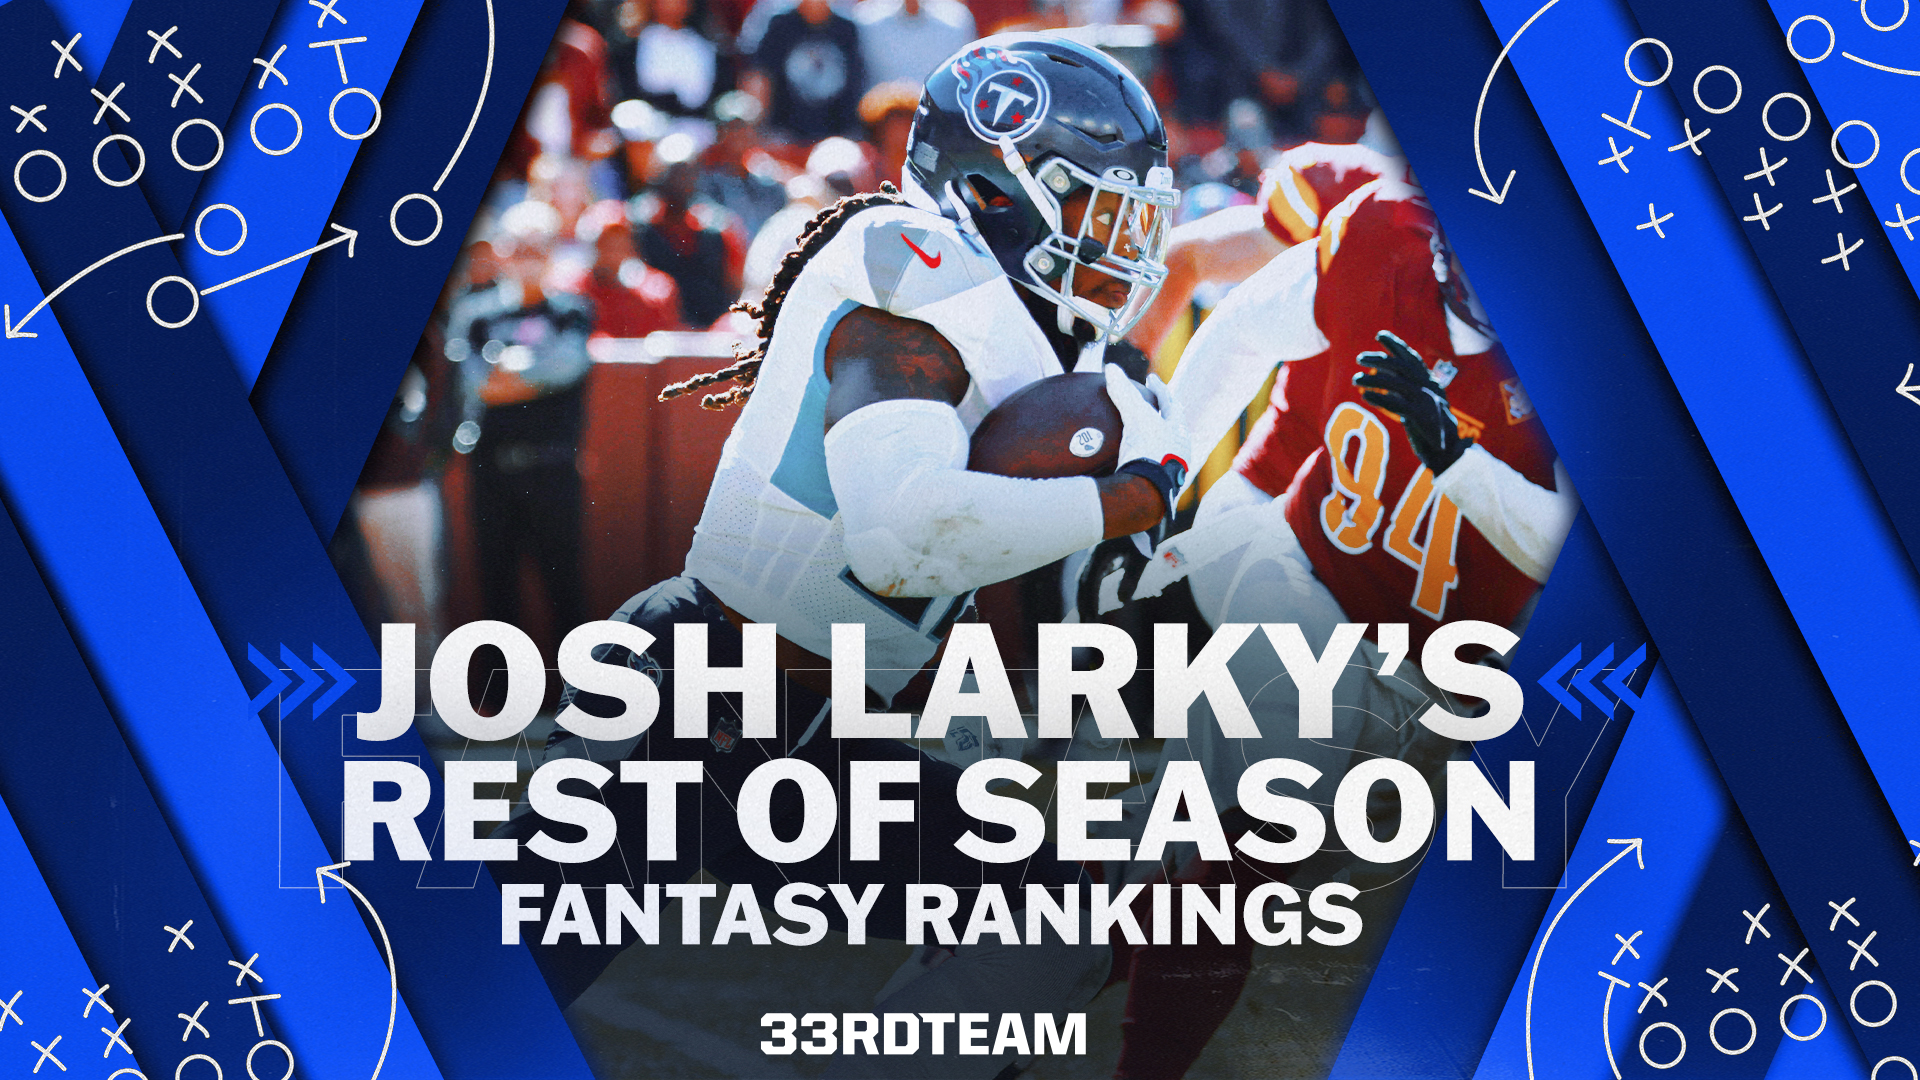 Josh Larky’s Rest of Season Fantasy Rankings